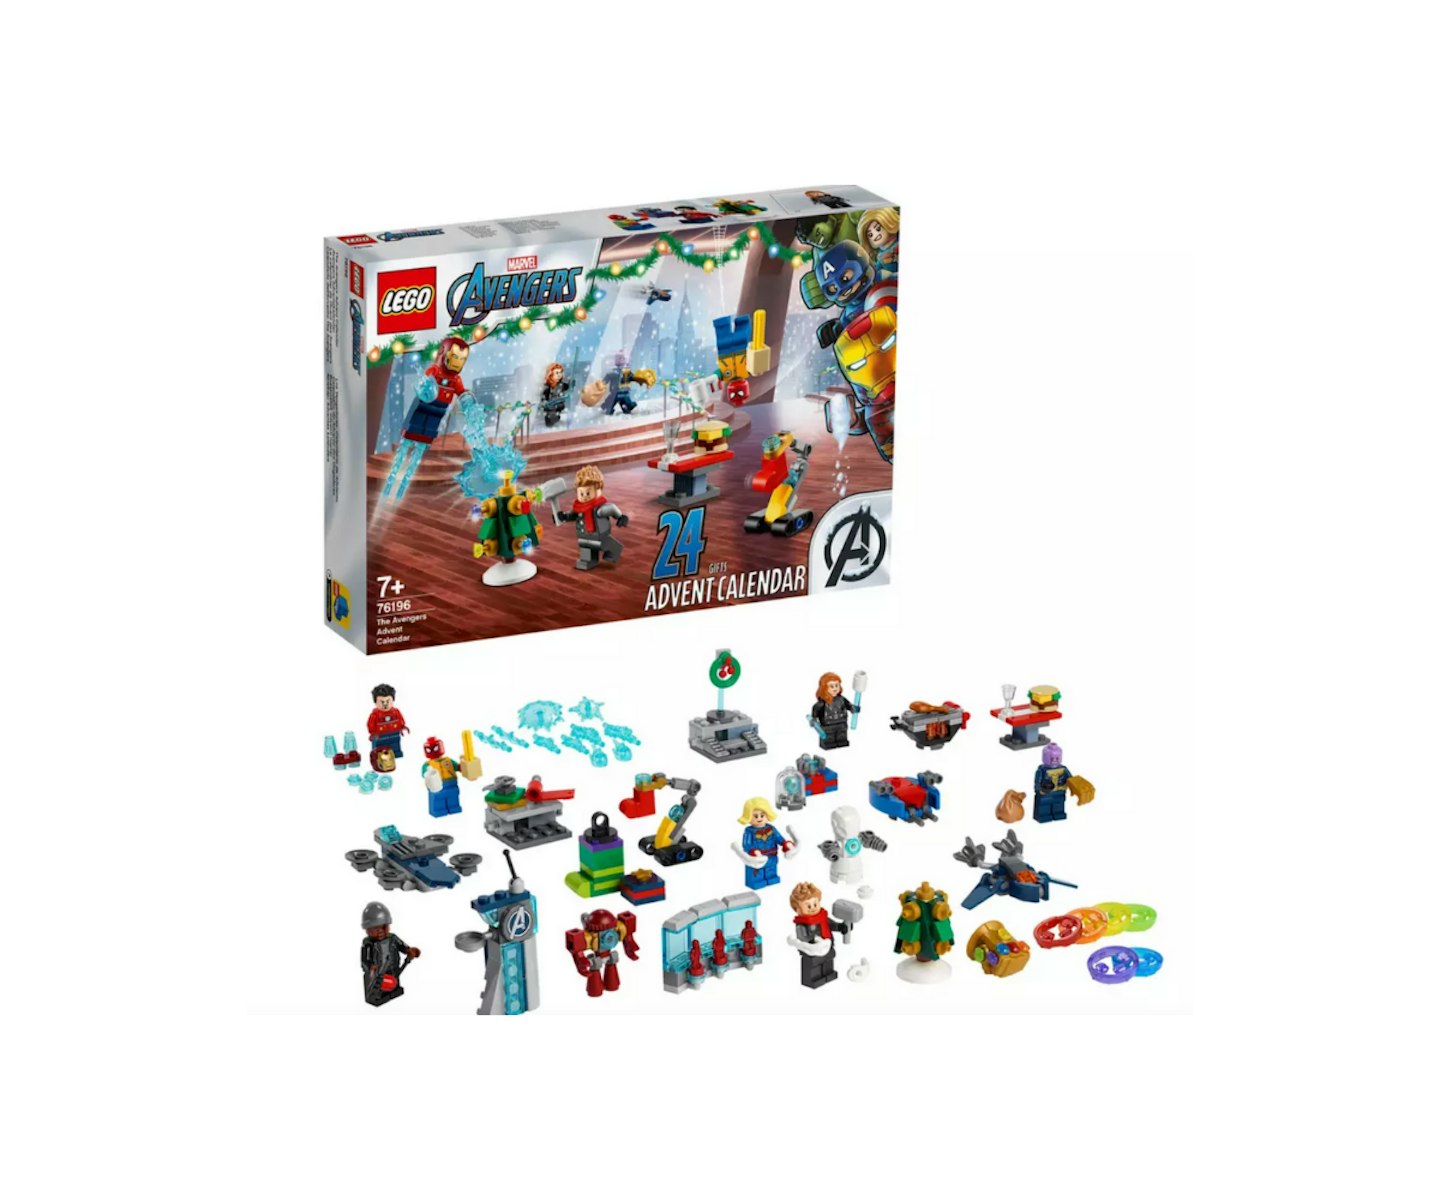 LEGO Marvel The Avengers Advent Calendar Building Set 76196